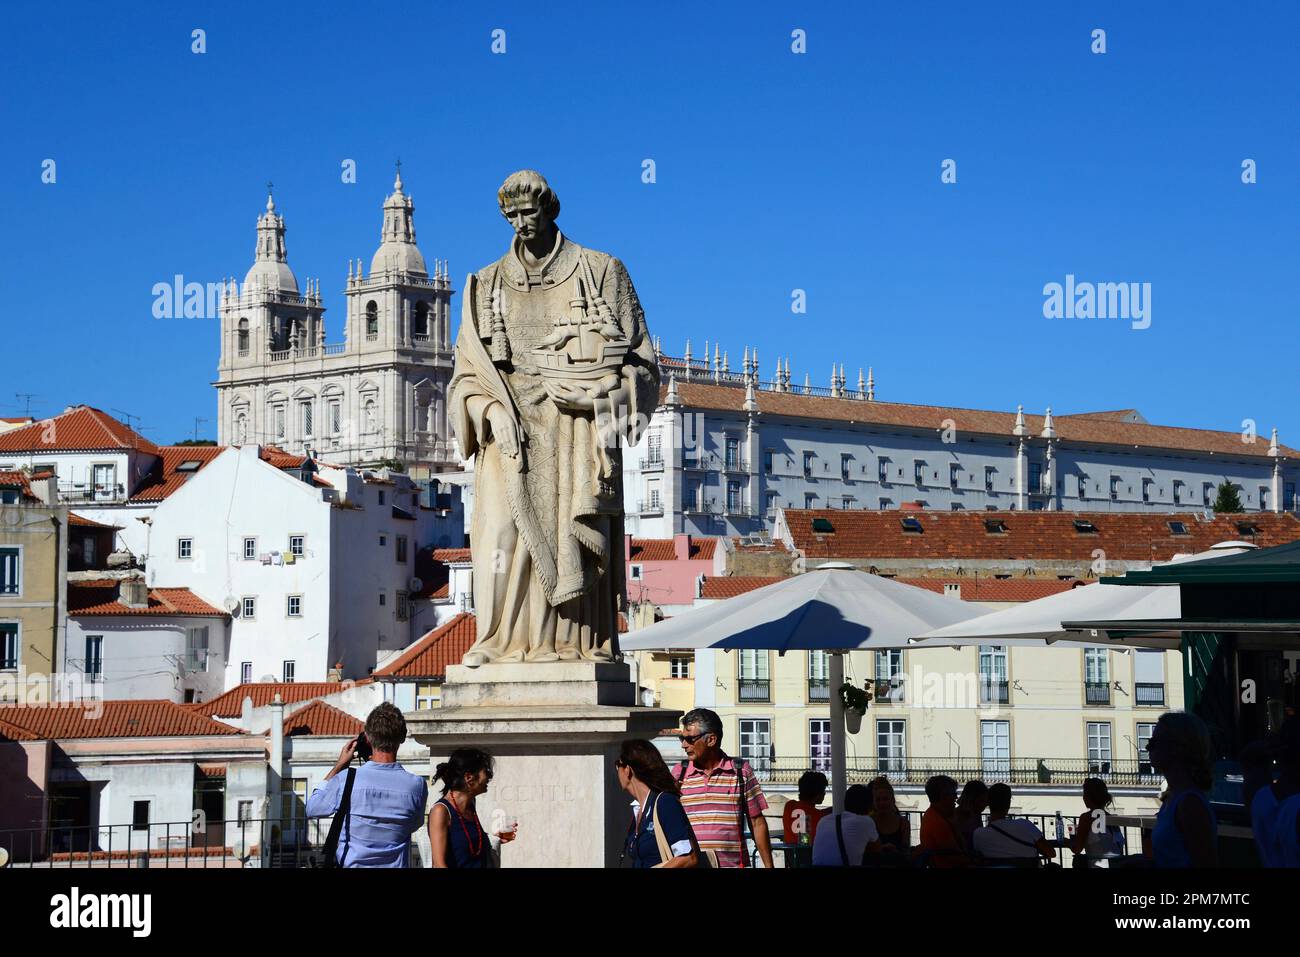 Lissabon (Lisboa), Alfama mit Kloster Sao Vicente de Fora und Statue von Sao Vicente. Portugal. Stockfoto